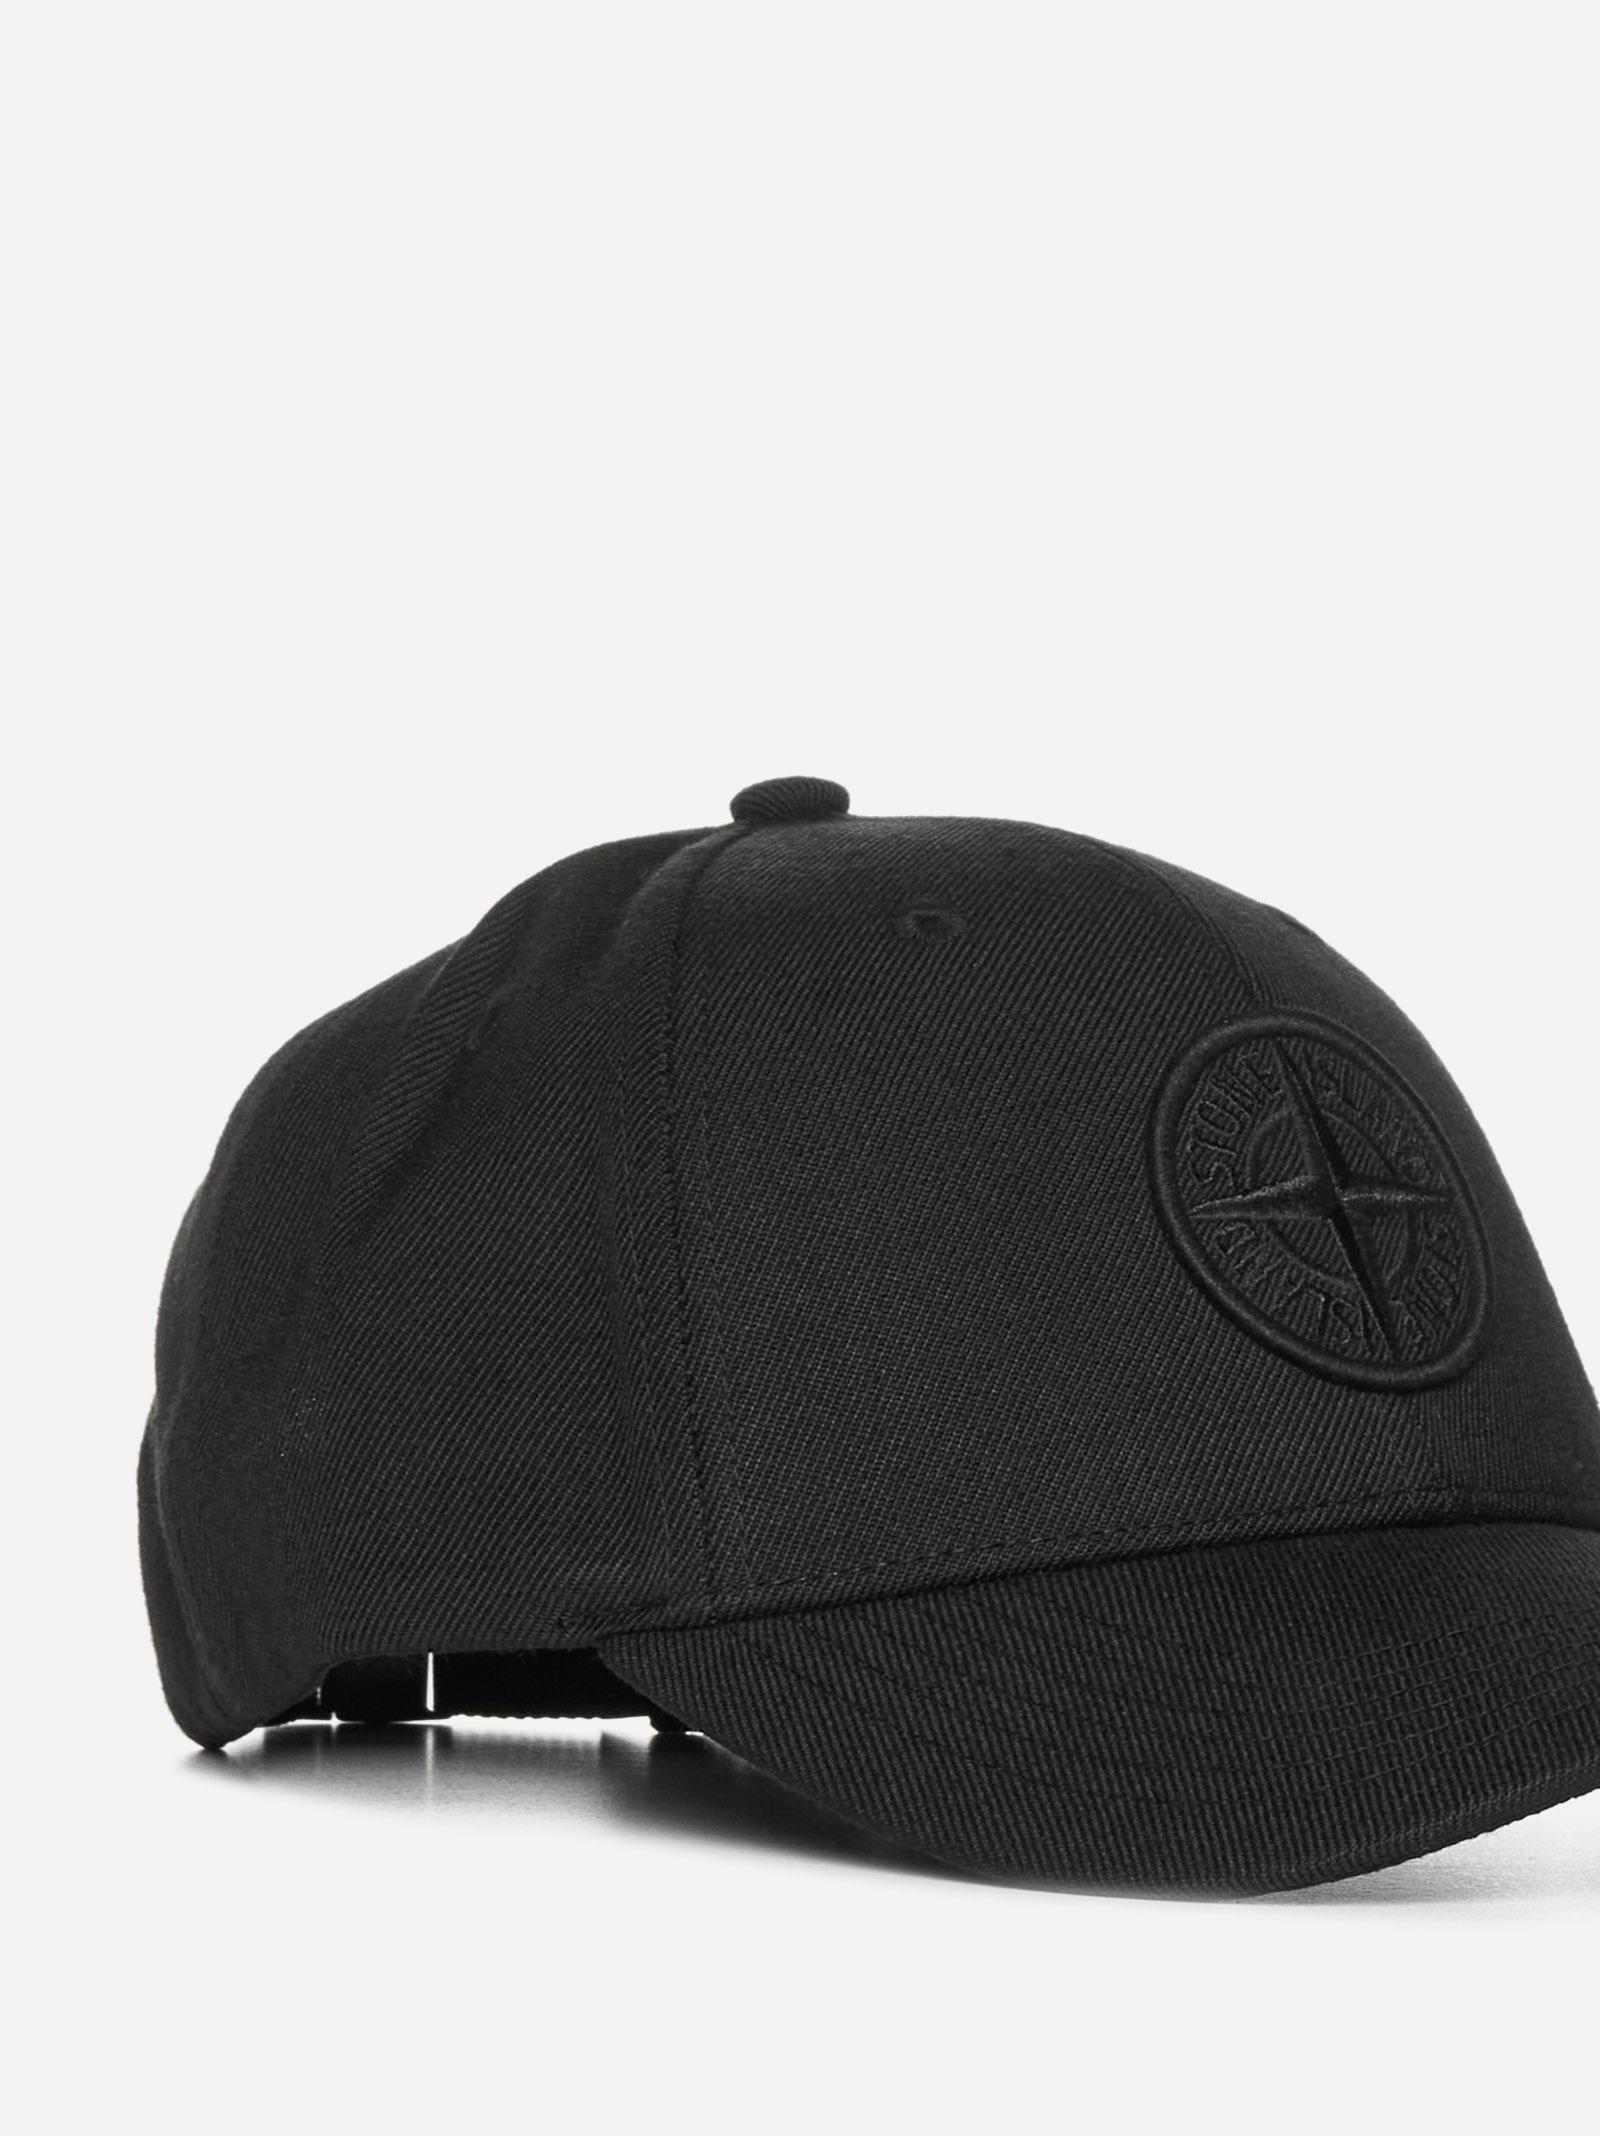 Stone Island Hats in Black for Men | Lyst